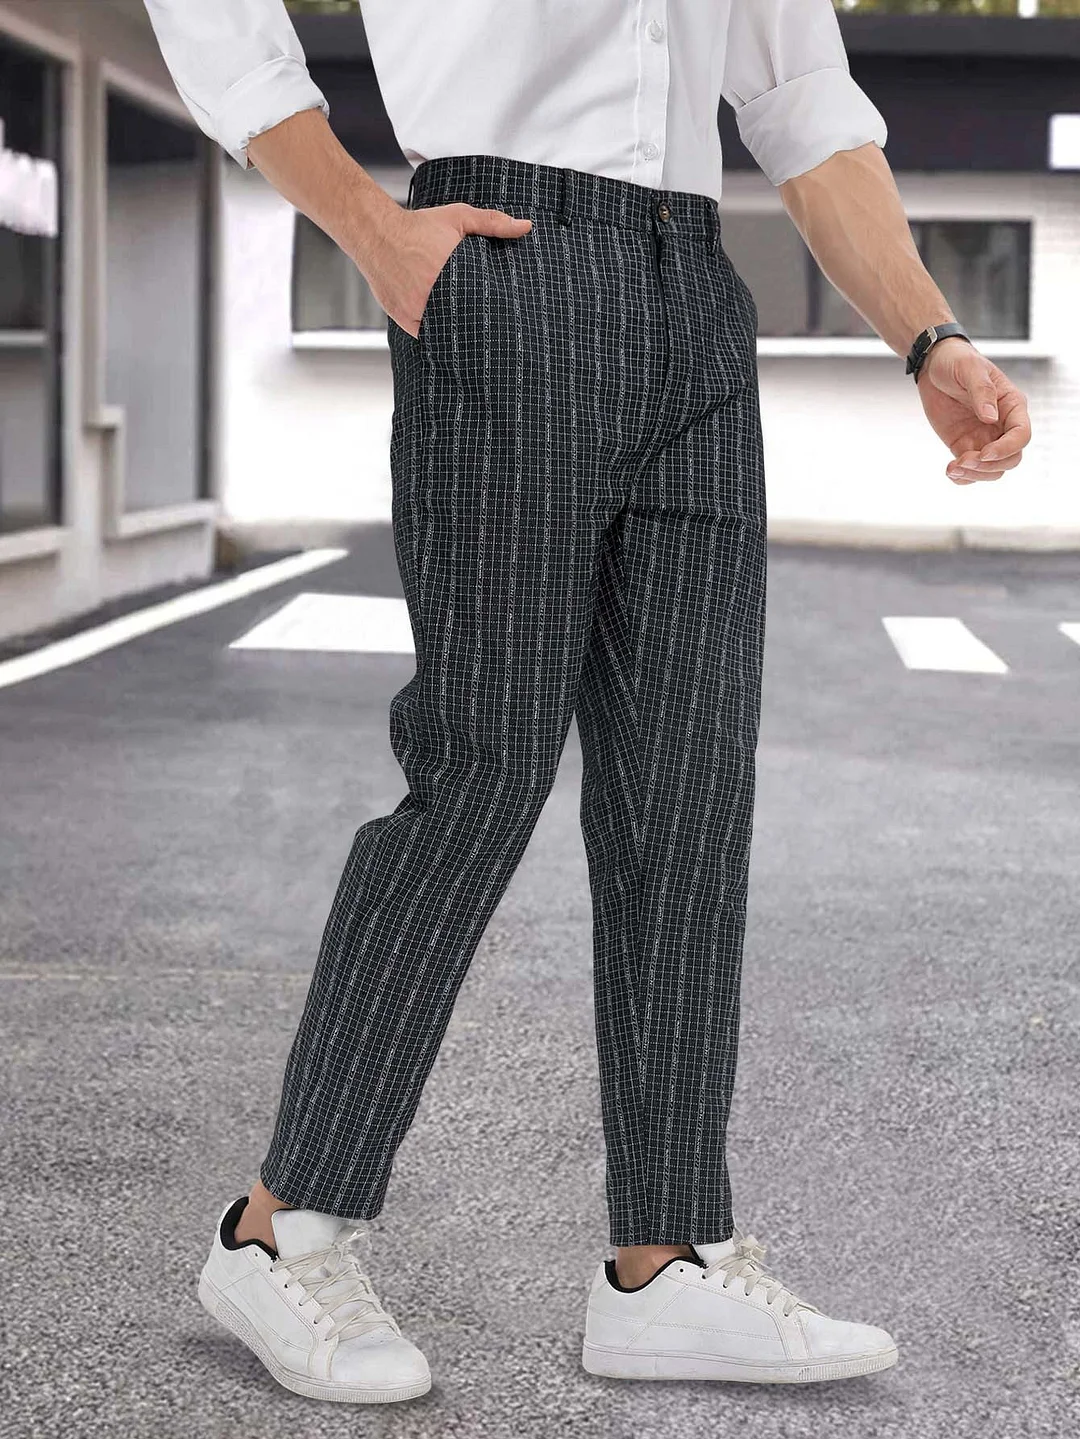 Men‘s Retro Stripe Printed Trousers